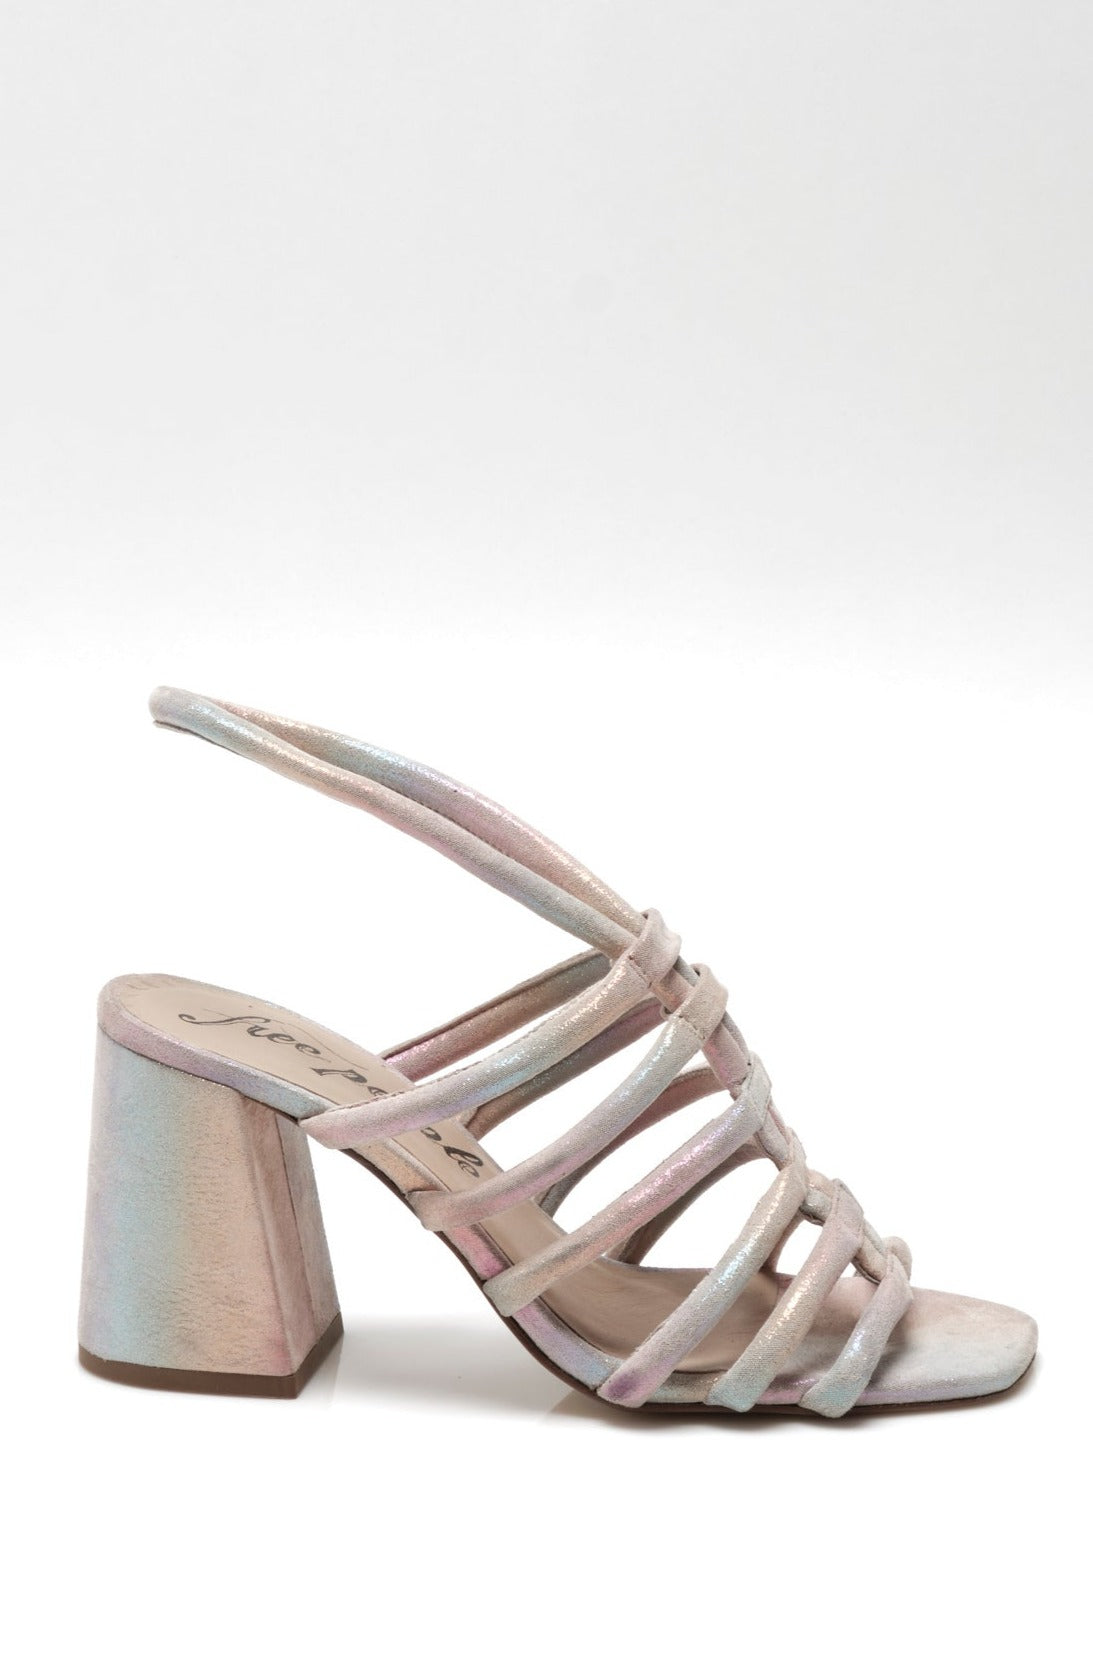 Colette Cinched Heels